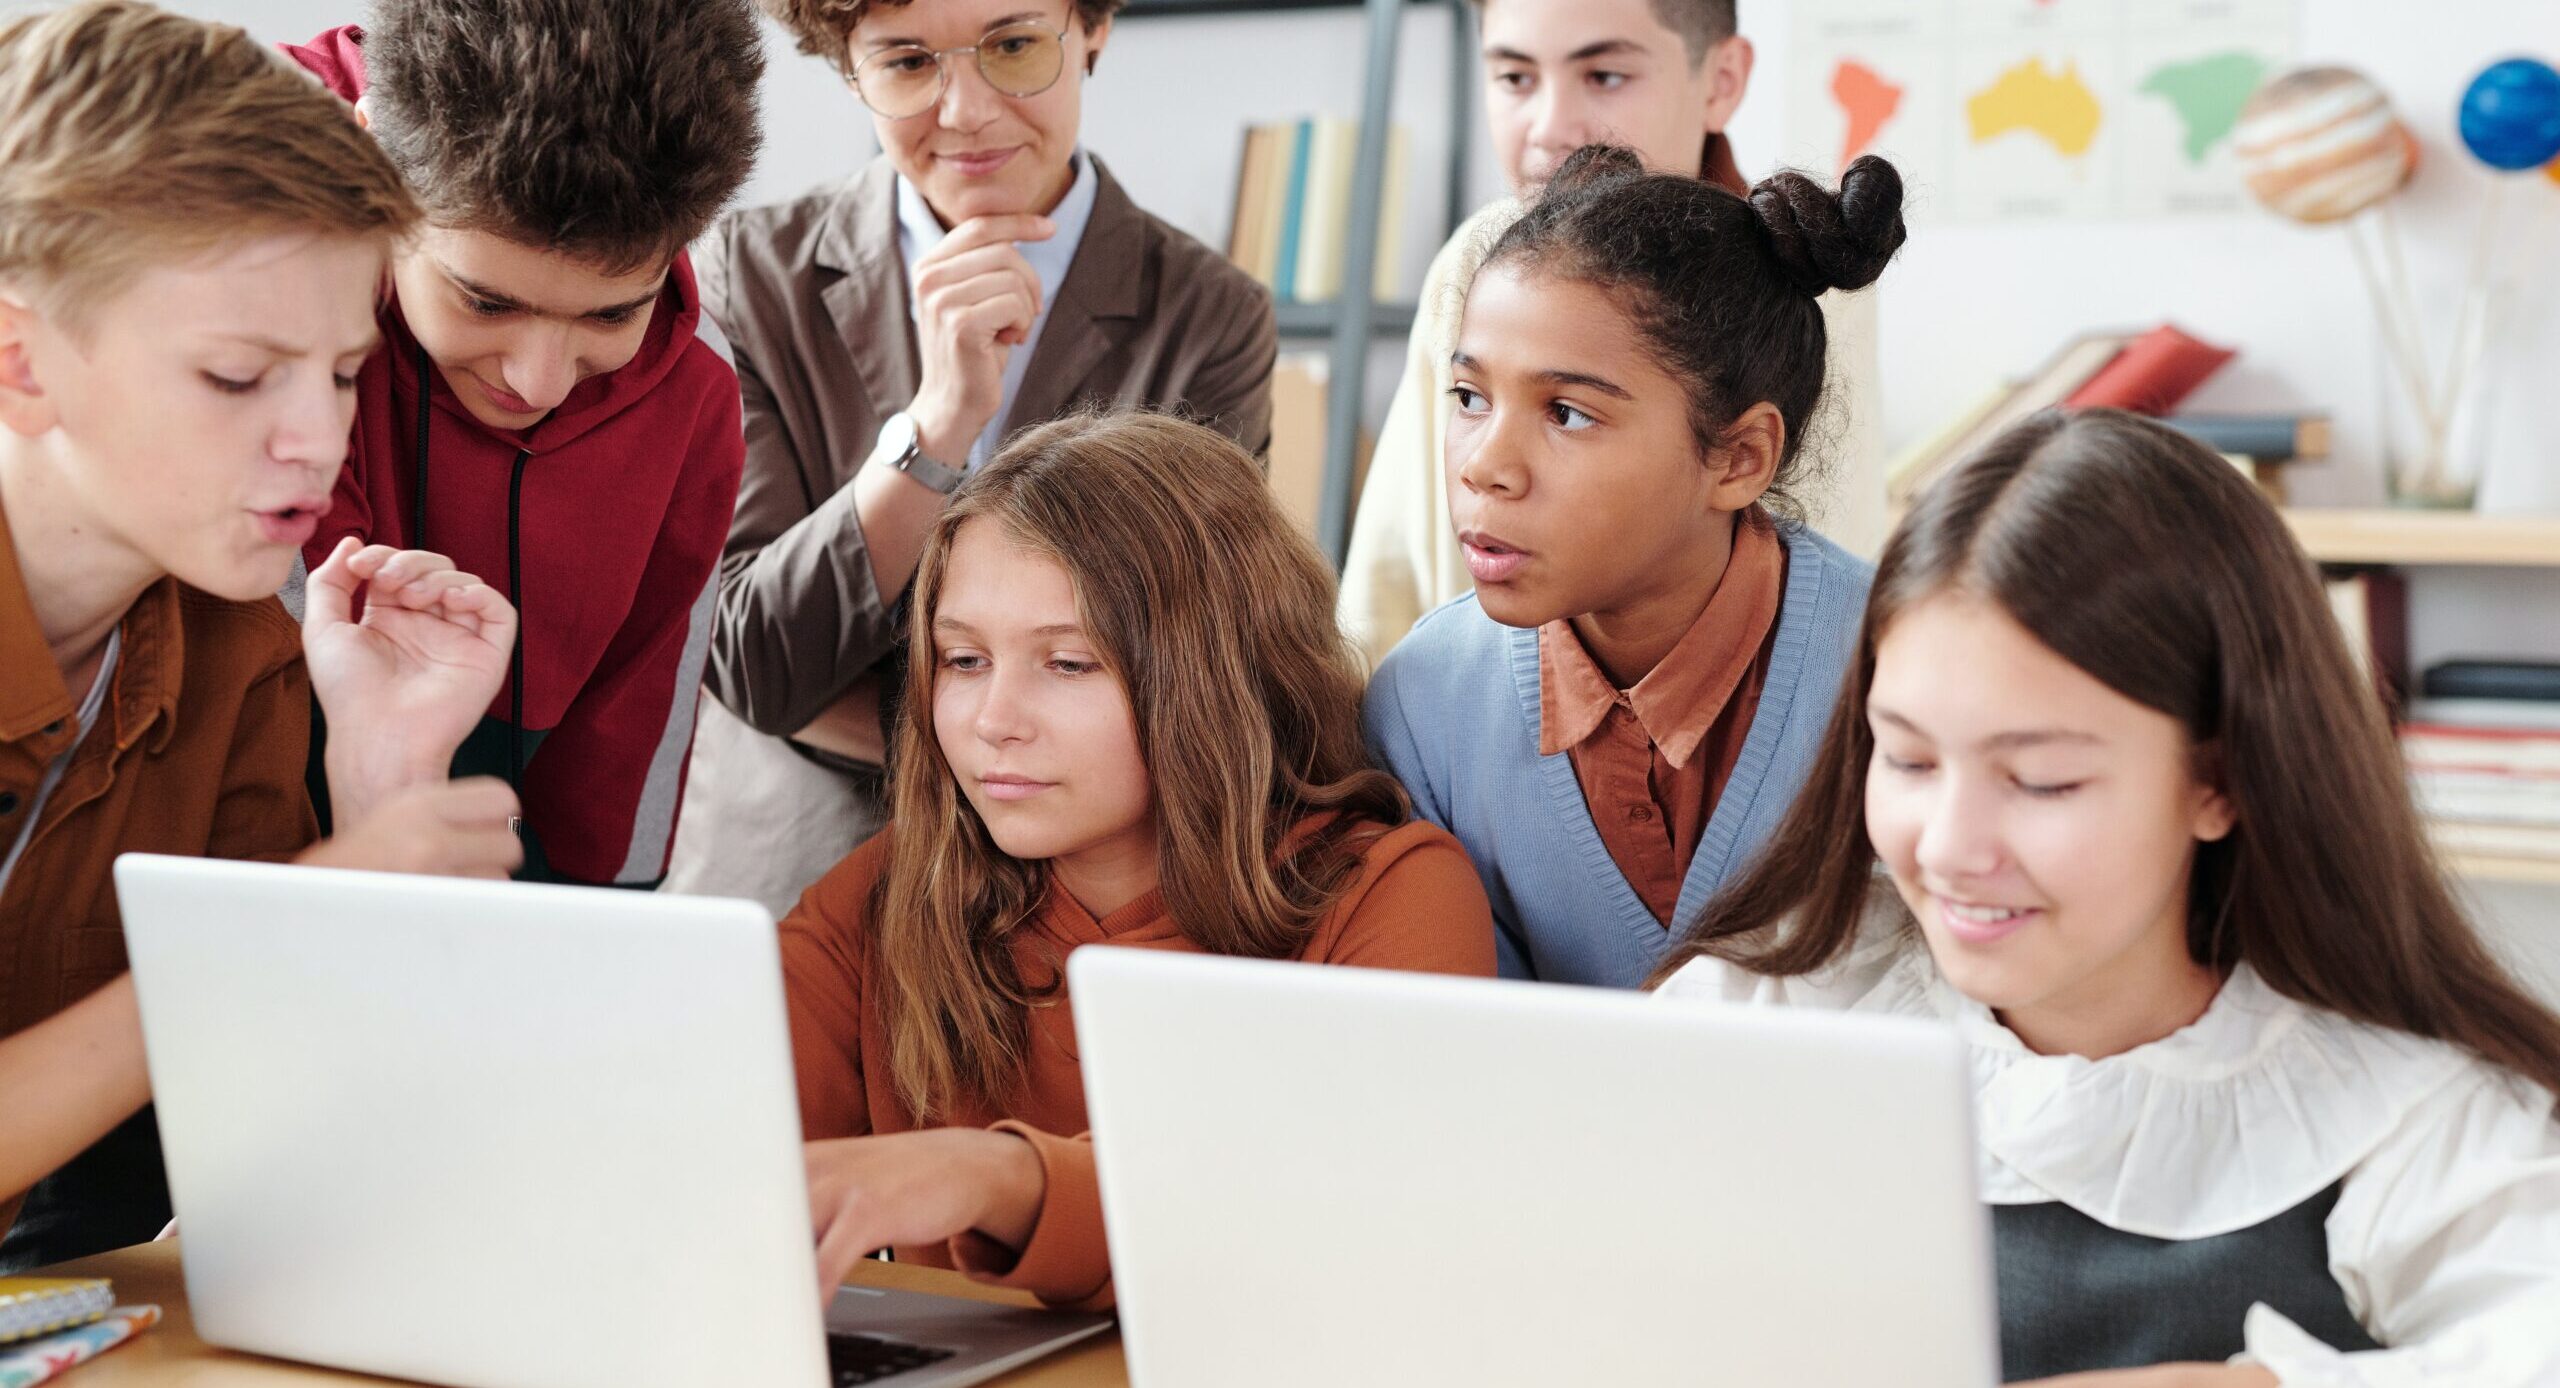 Children huddled around laptops in class